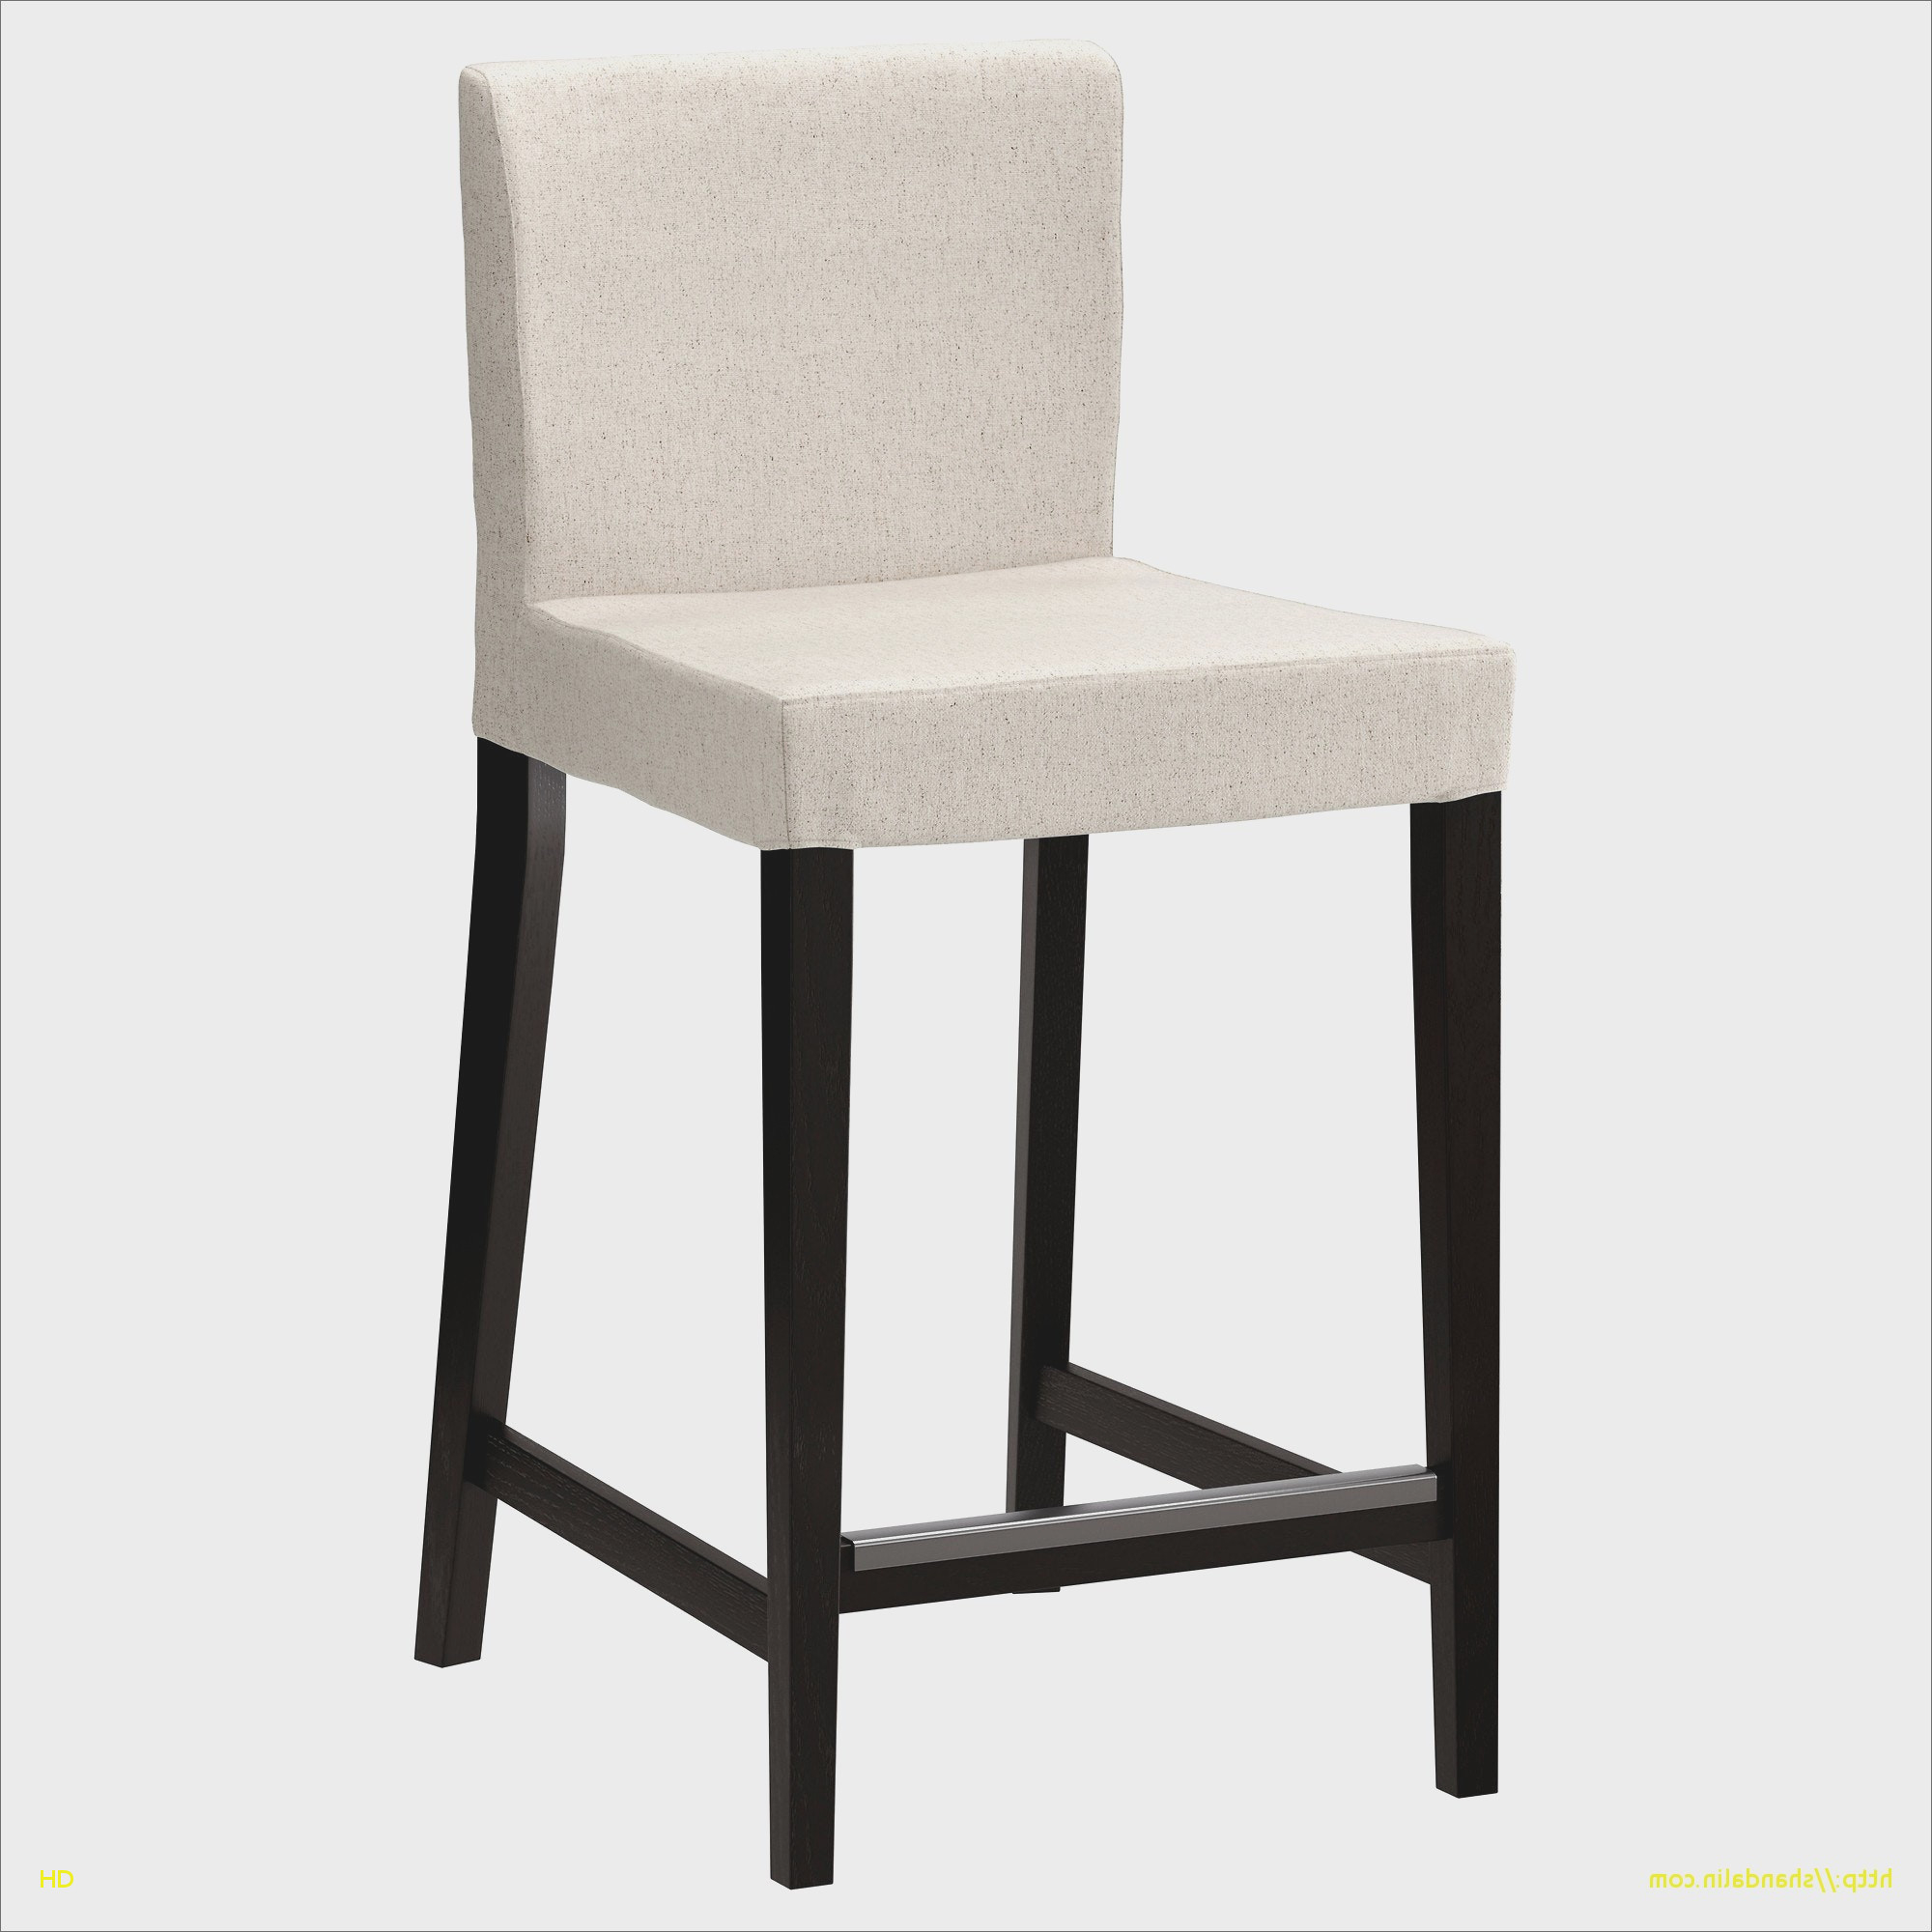 chaise de bar alinea inspirant table cuisine cool dechaise chaise de bar alinea inspirant table cuisine cool tabouret of